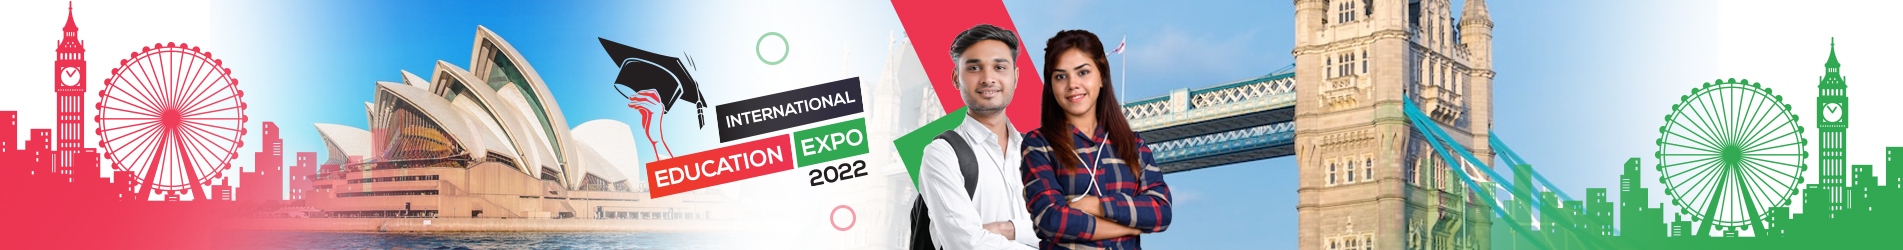 International Education Expo 2022